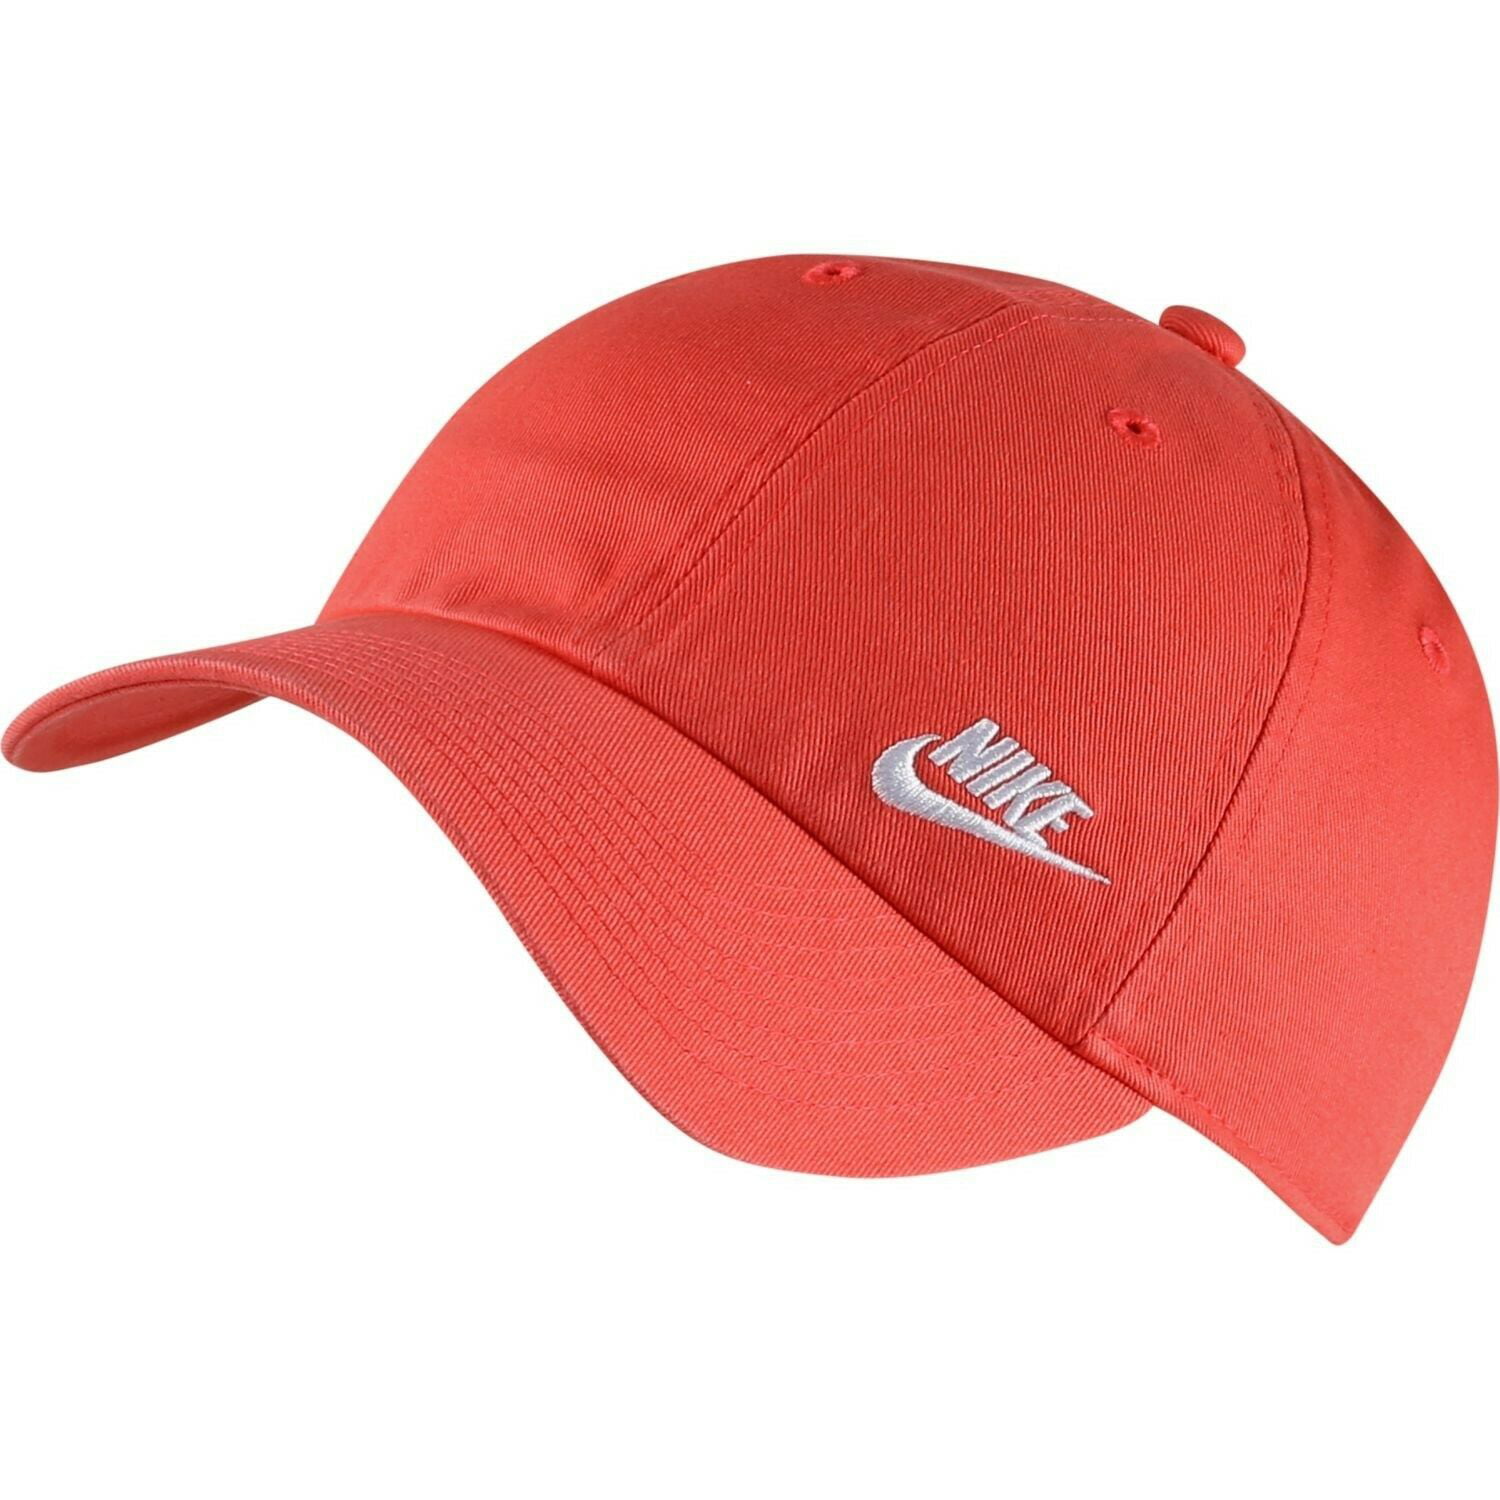 Nike Women's Elite Arobill Tailwind Hat, Ember Glow/White One Size ...